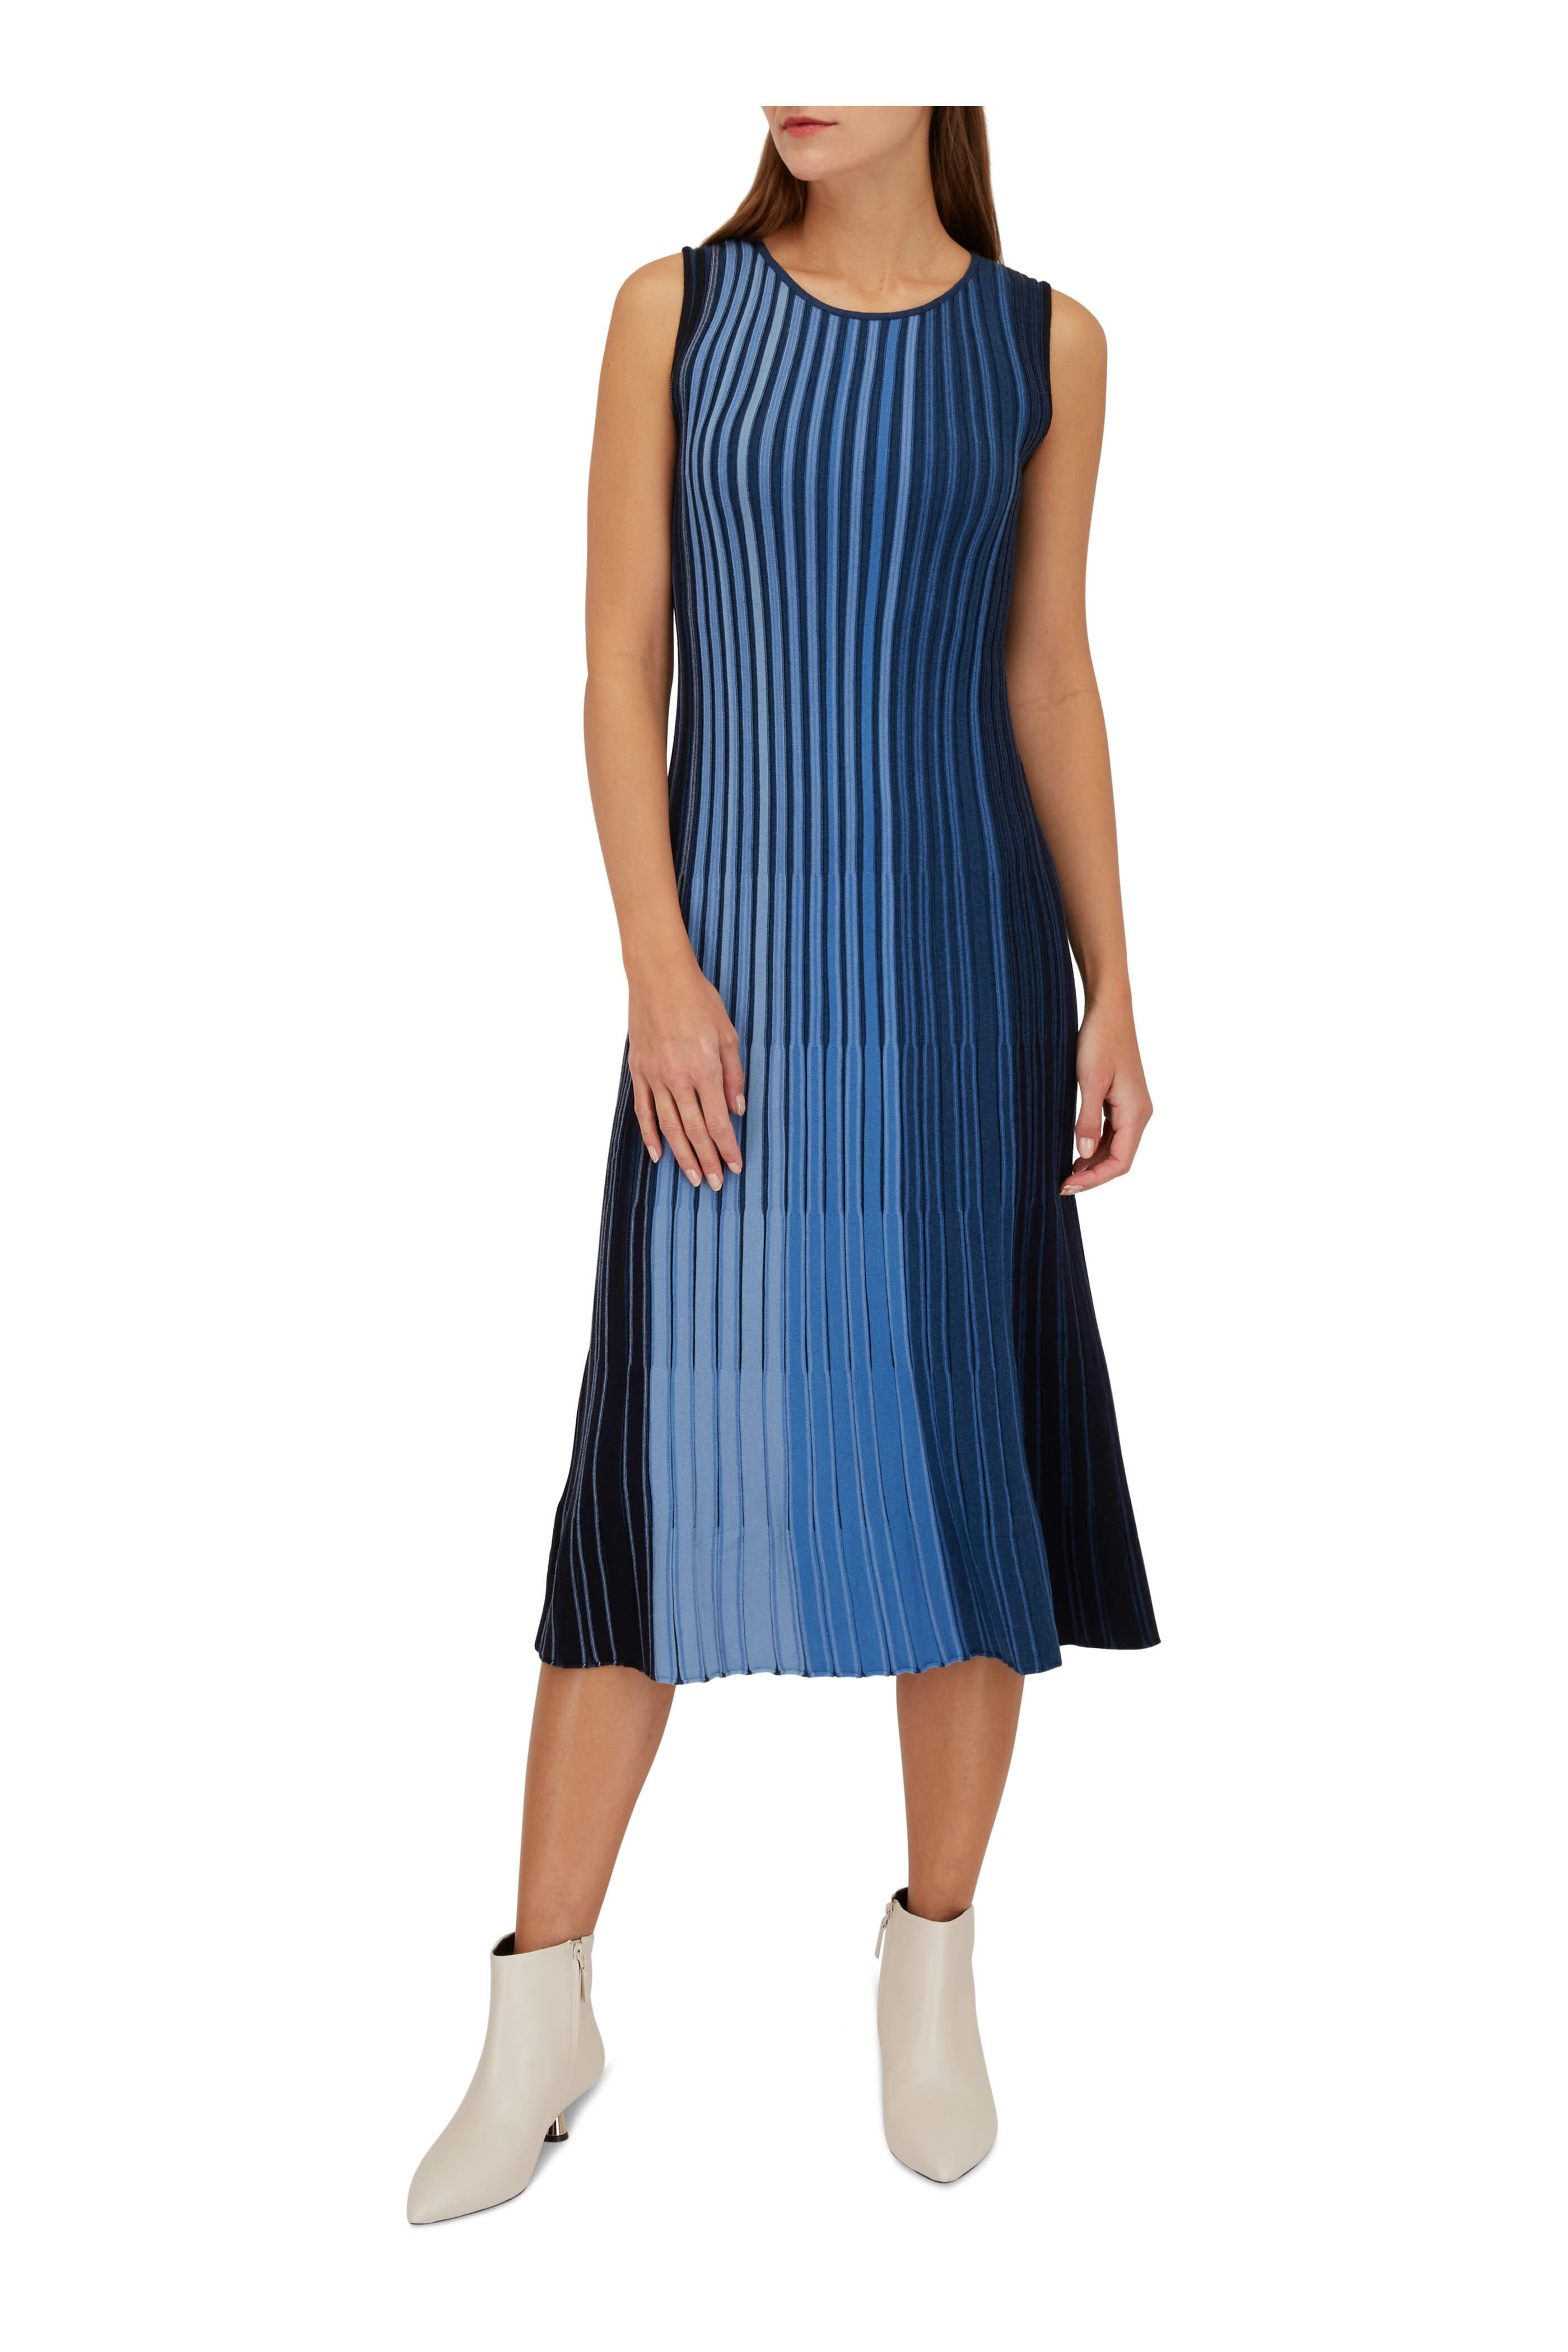 Akris Punto - Blue Striped Wool Knit Dress | Mitchell Stores